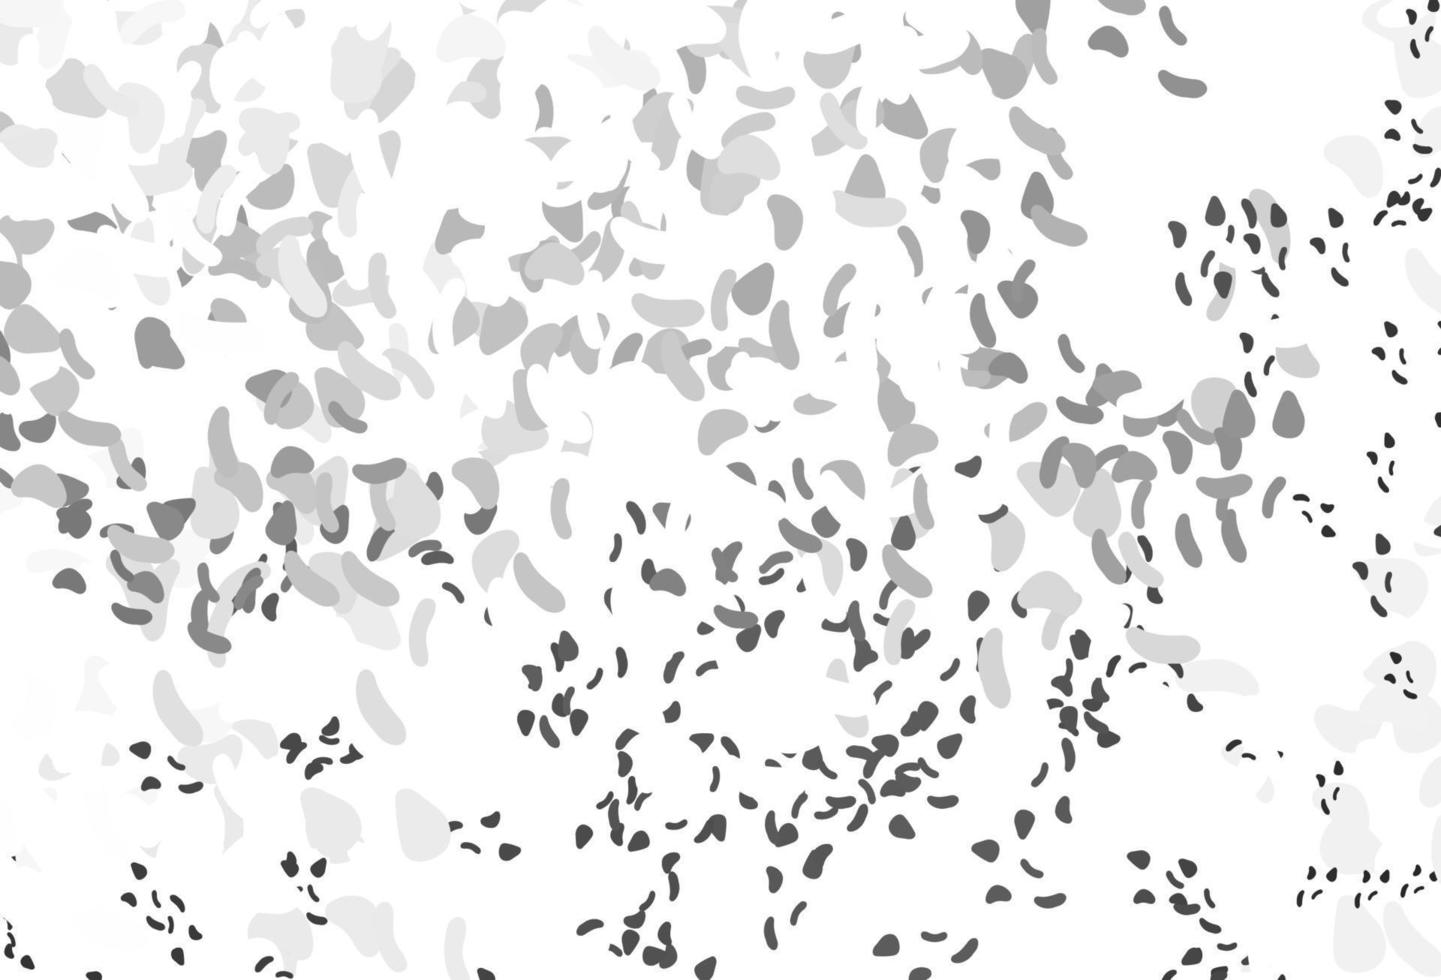 pano de fundo de vetor prata, cinza claro com formas abstratas.